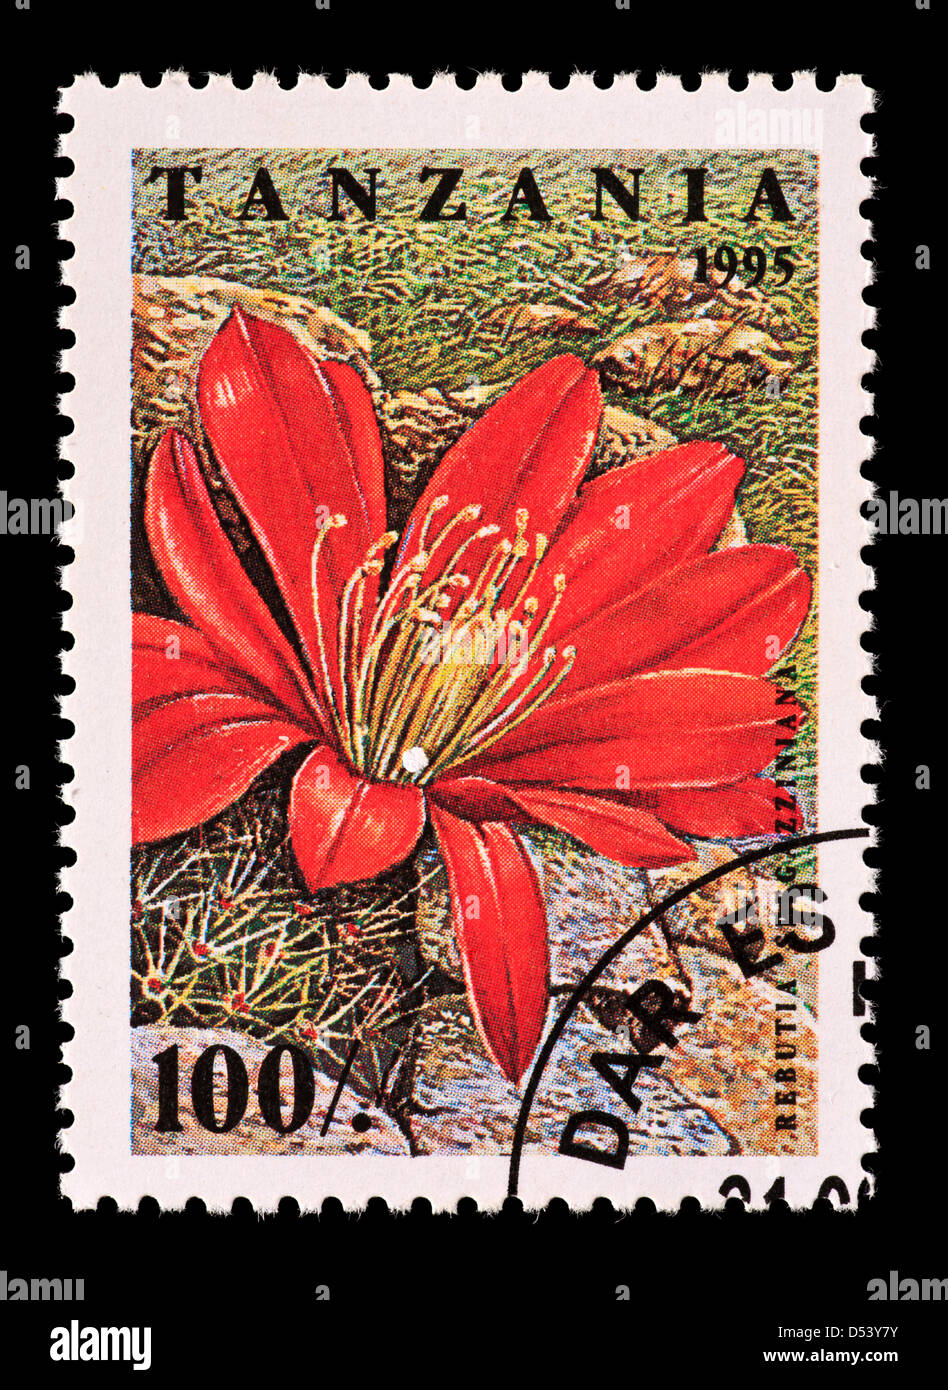 Postage stamp from Tanzania depicting a cactus flower (Rebutia spegazzinia) Stock Photo